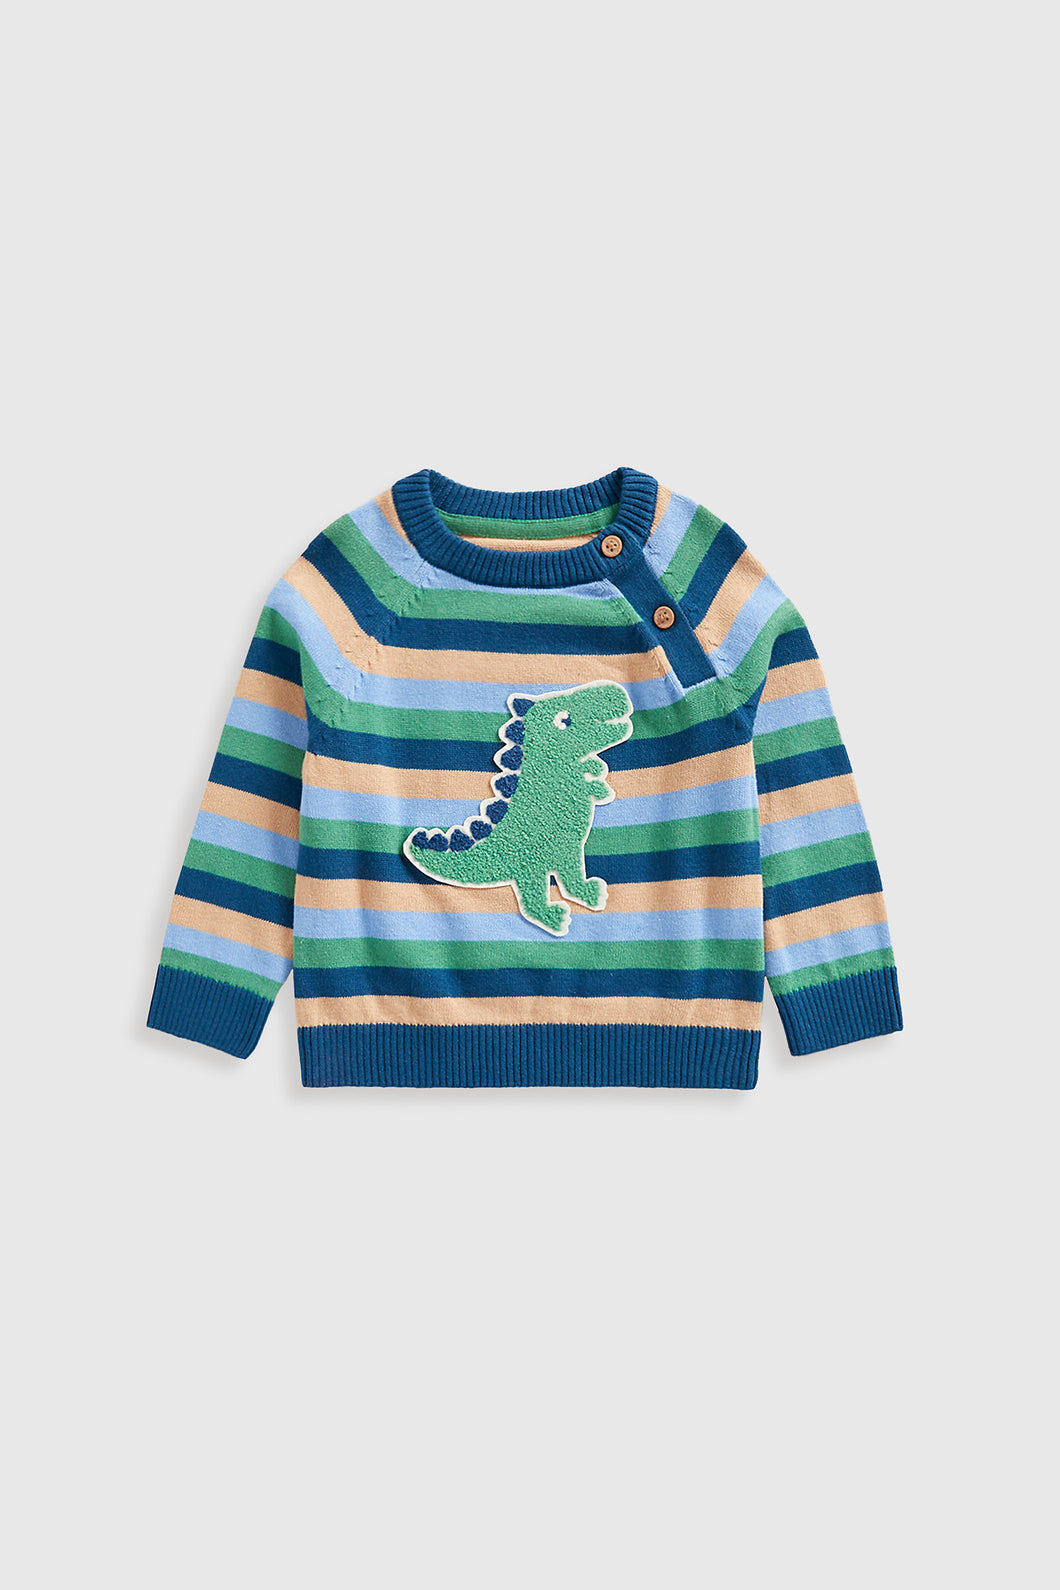 Mothercare Dinosaur Knitted Jumper